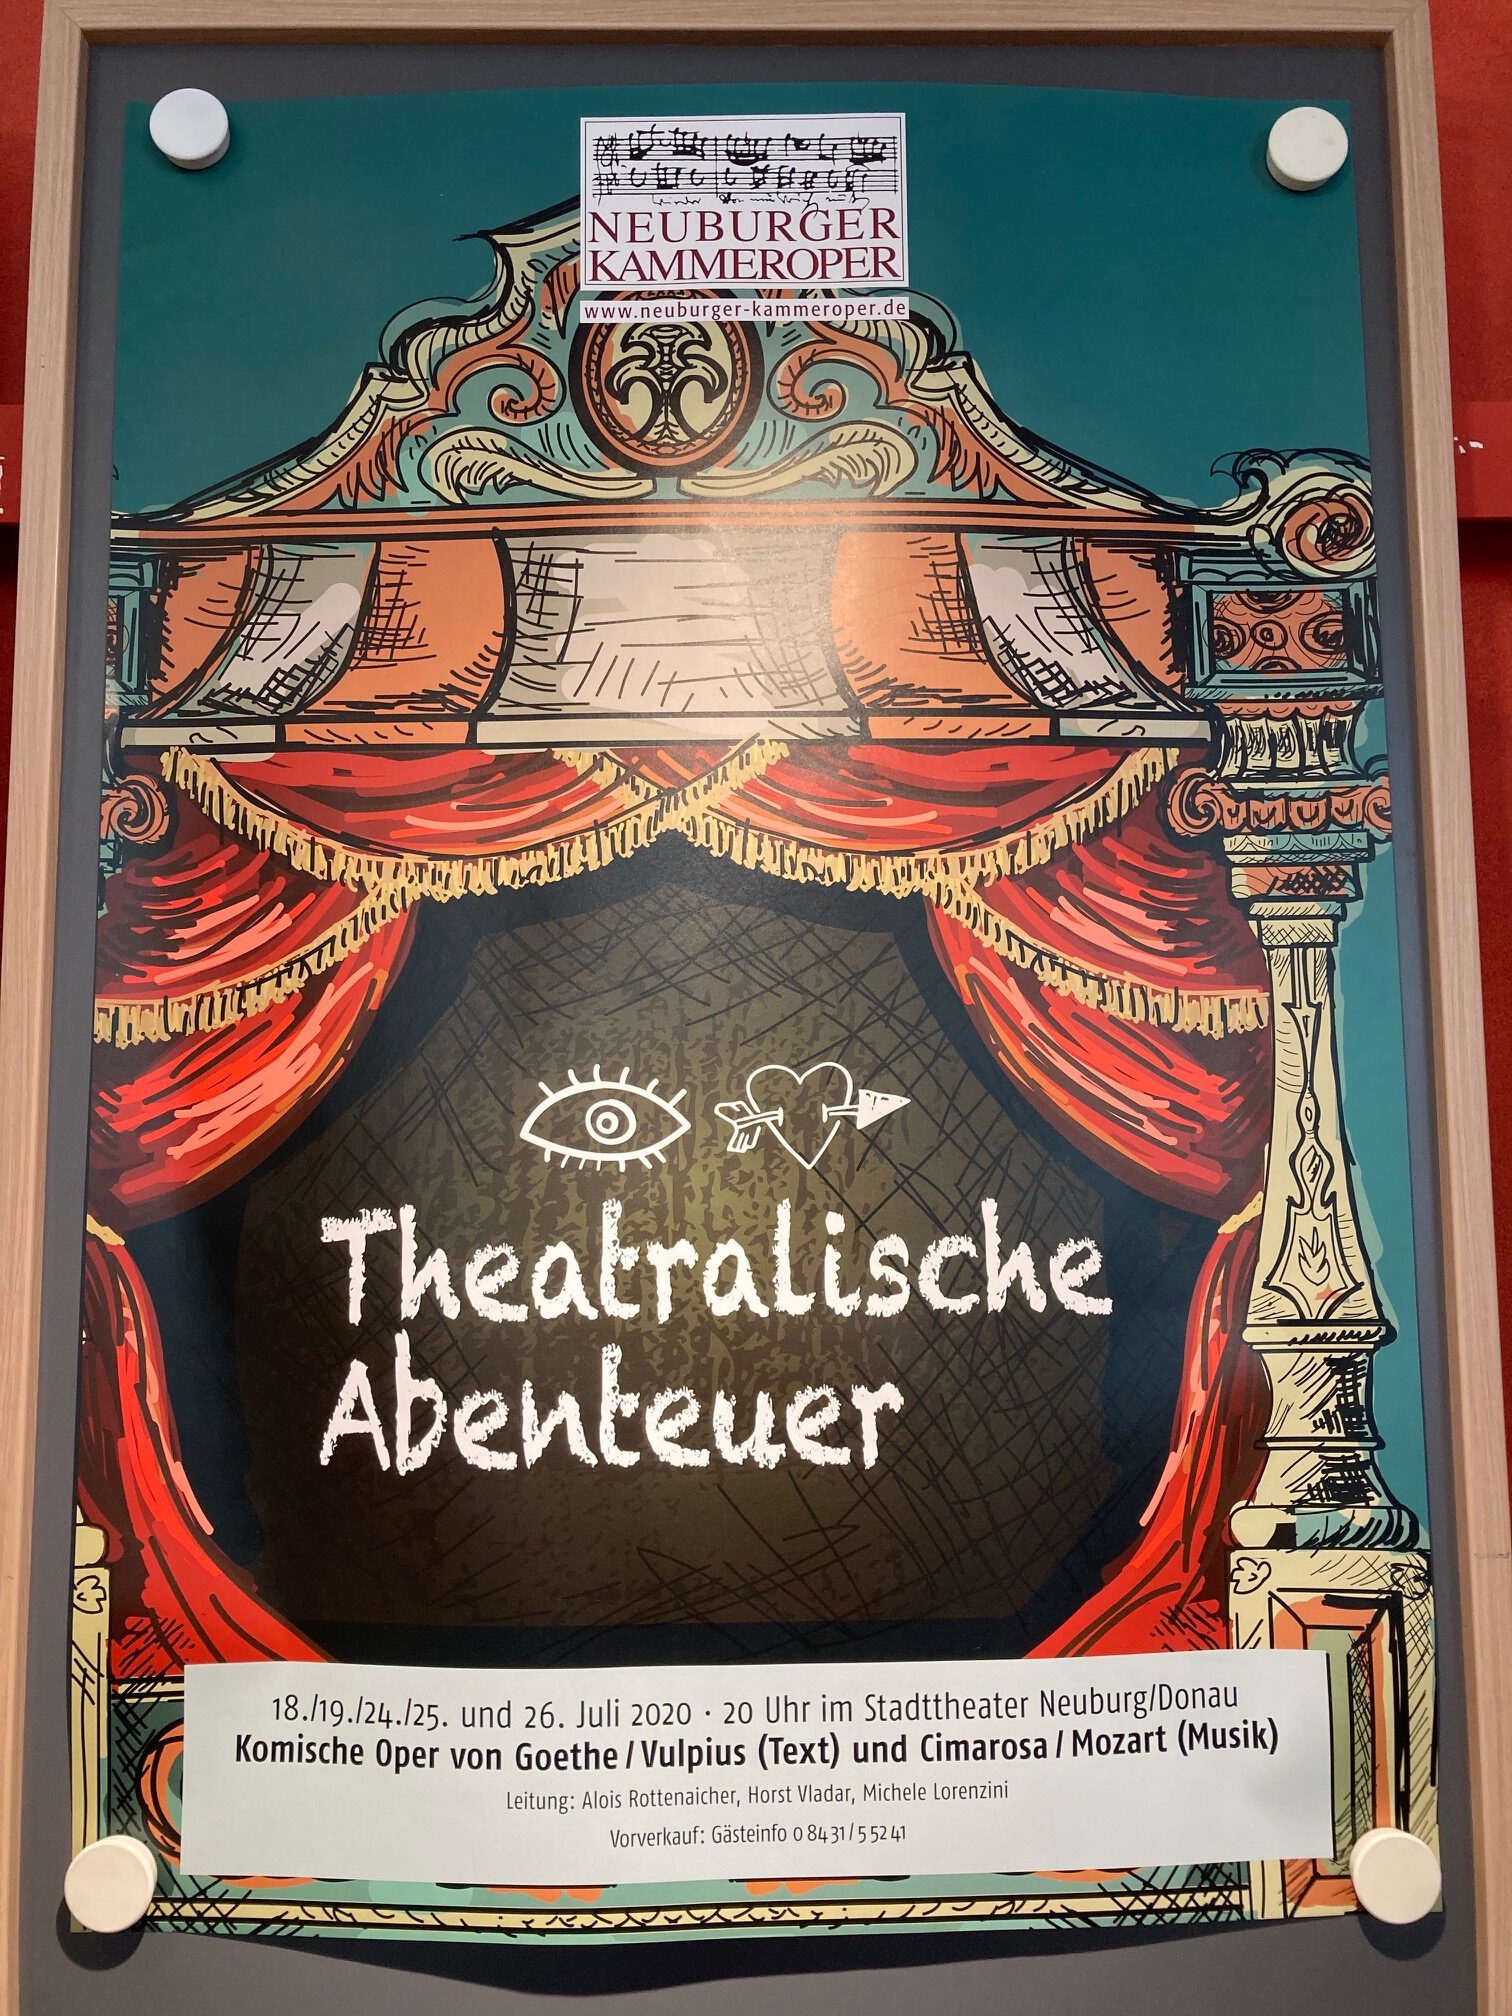 Neuburger Kammeroper “Theatralische Abenteuer”